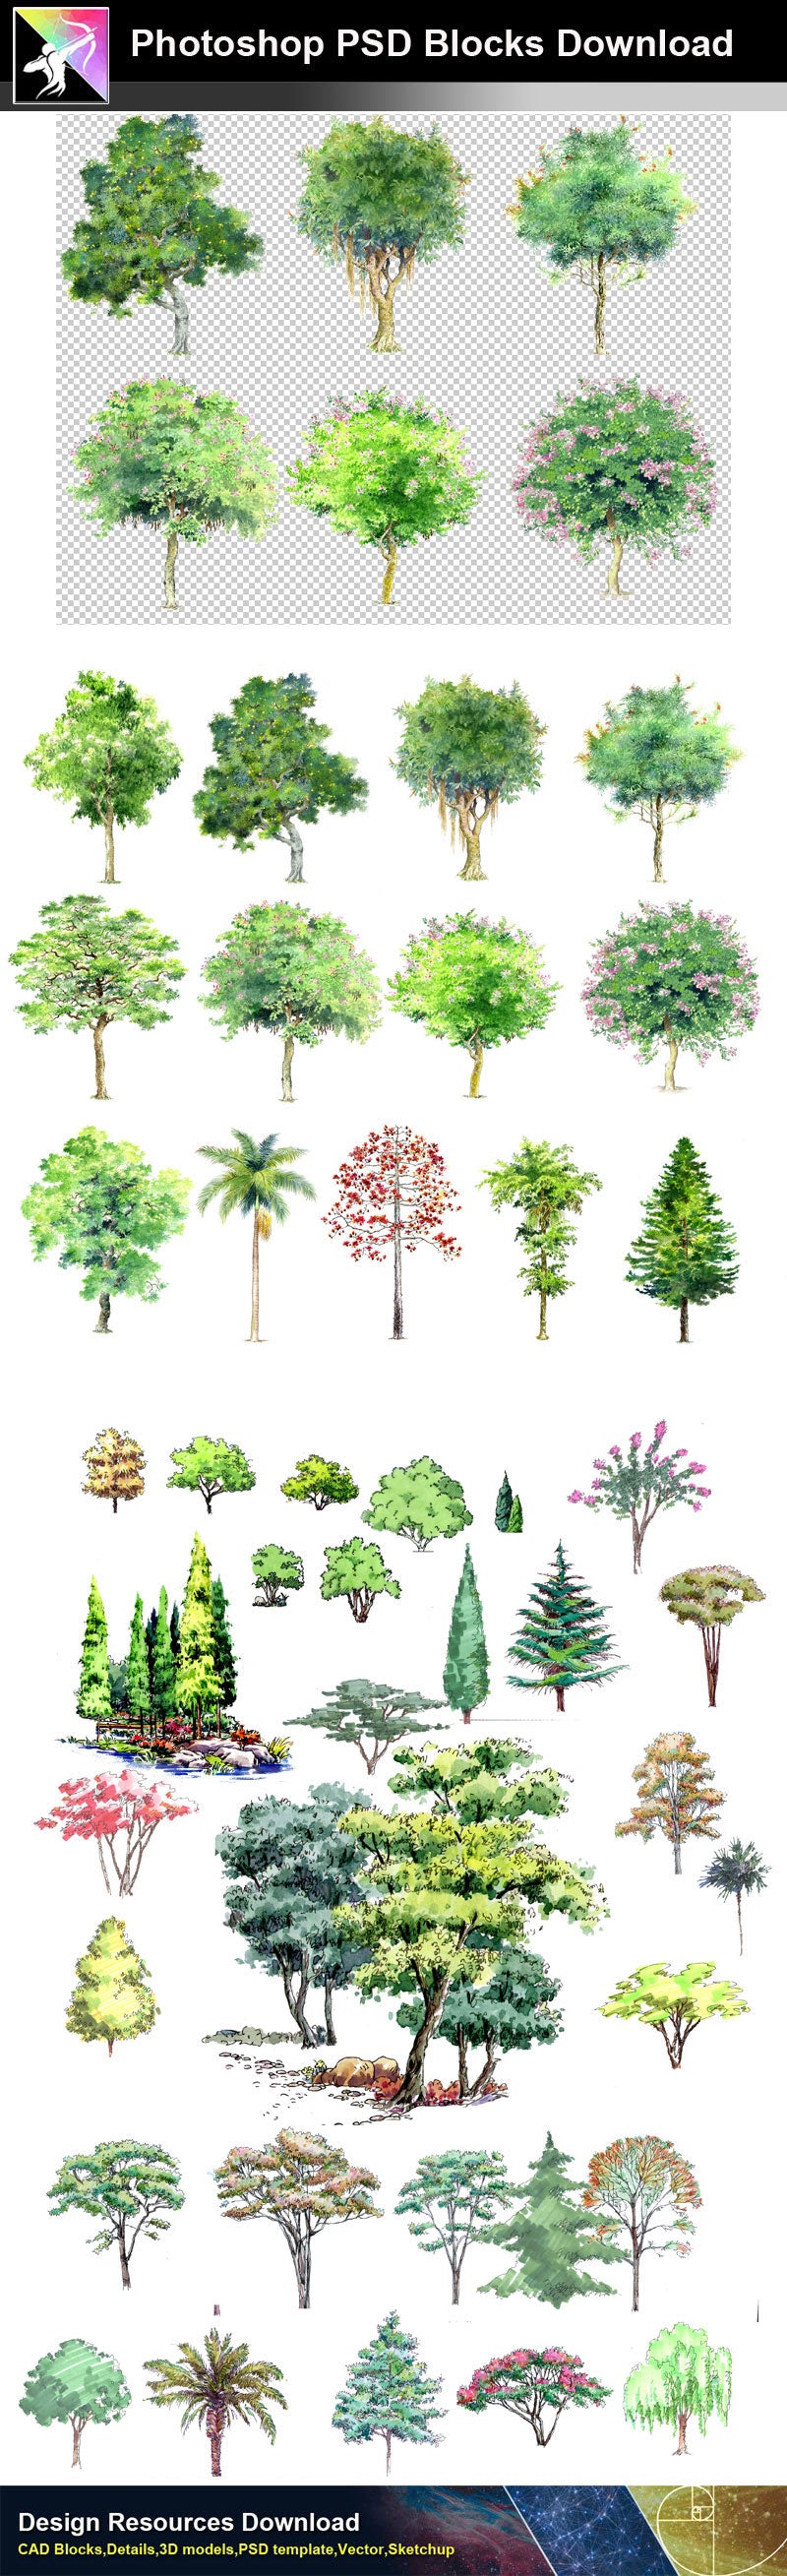 【Photoshop PSD Landscape Blocks】Hand-painted Tree Blocks